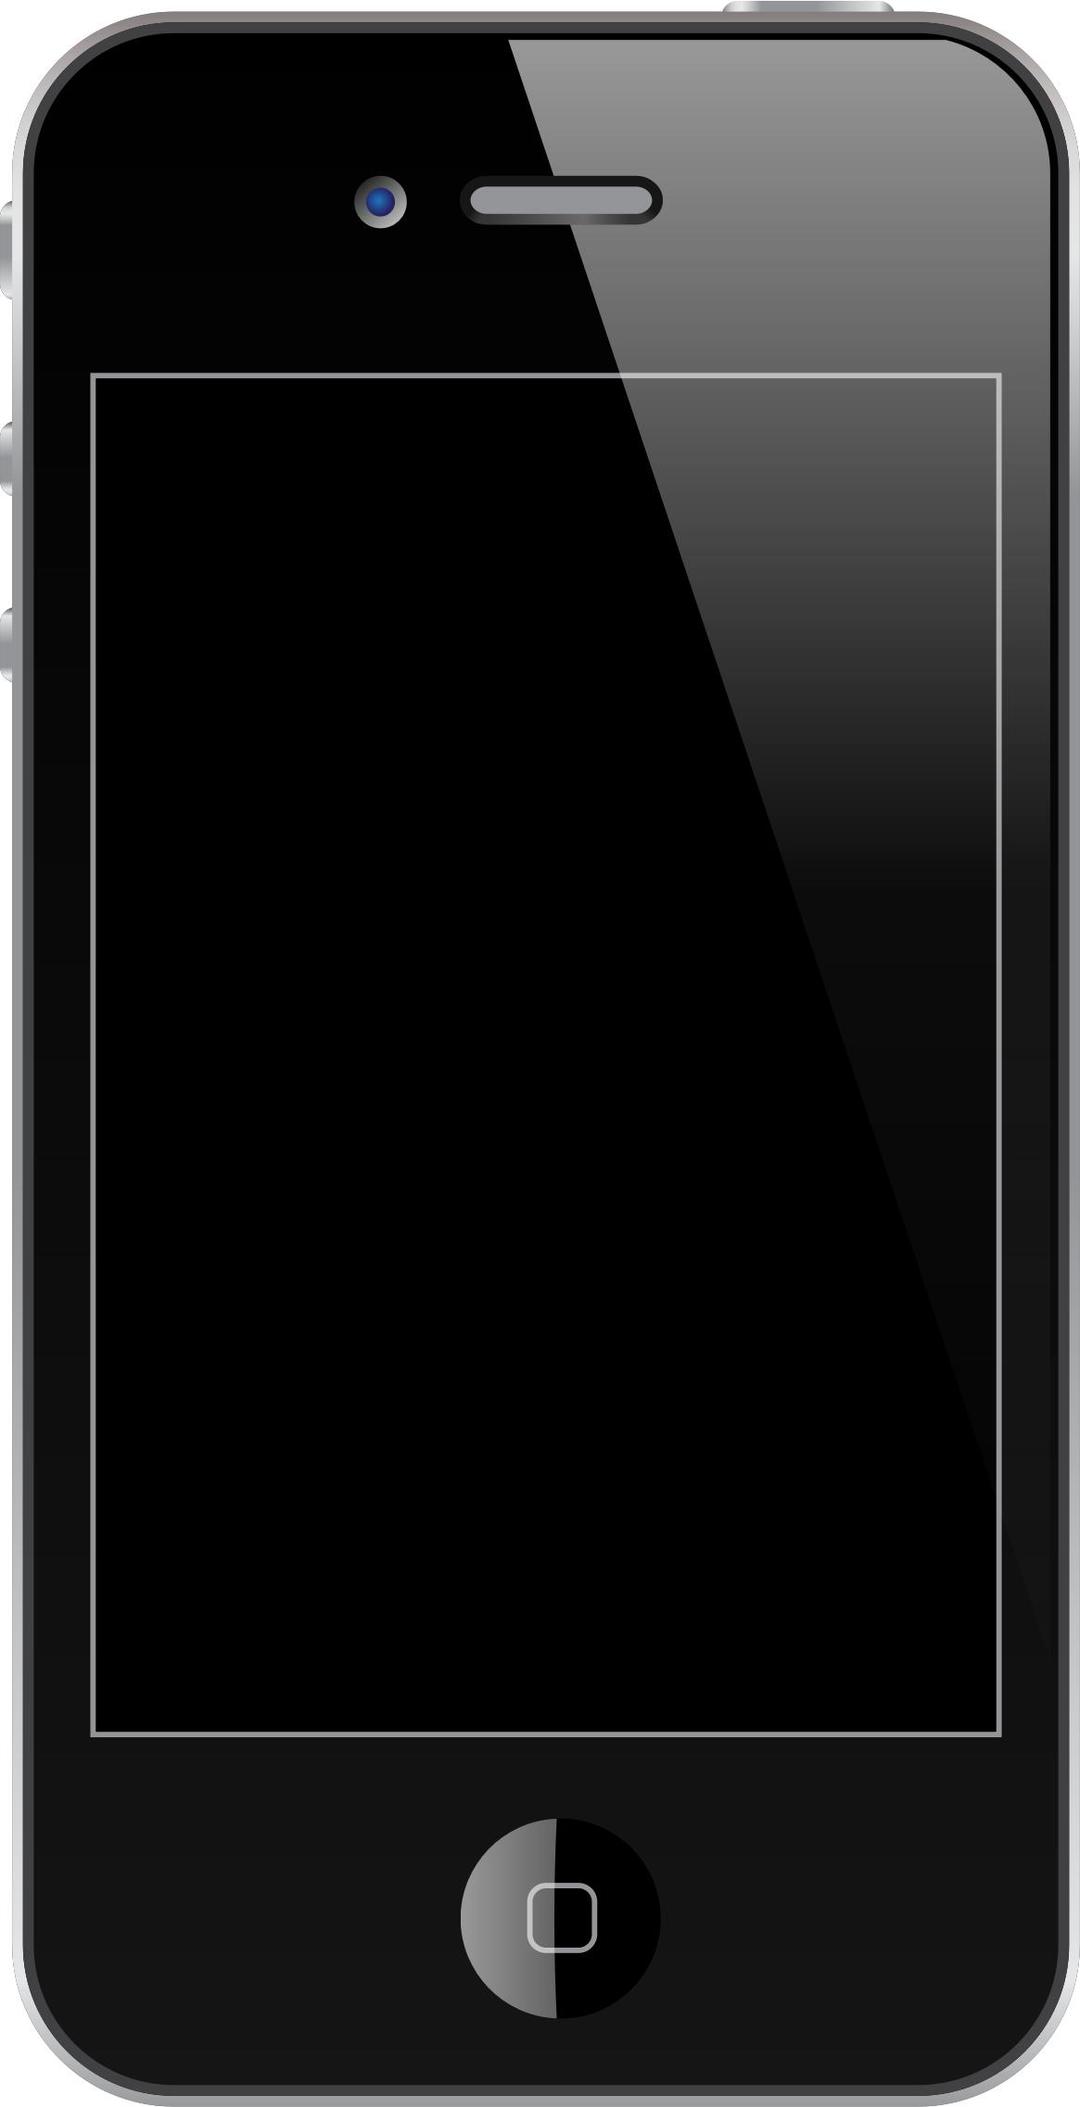 iPhone 4/4S png transparent